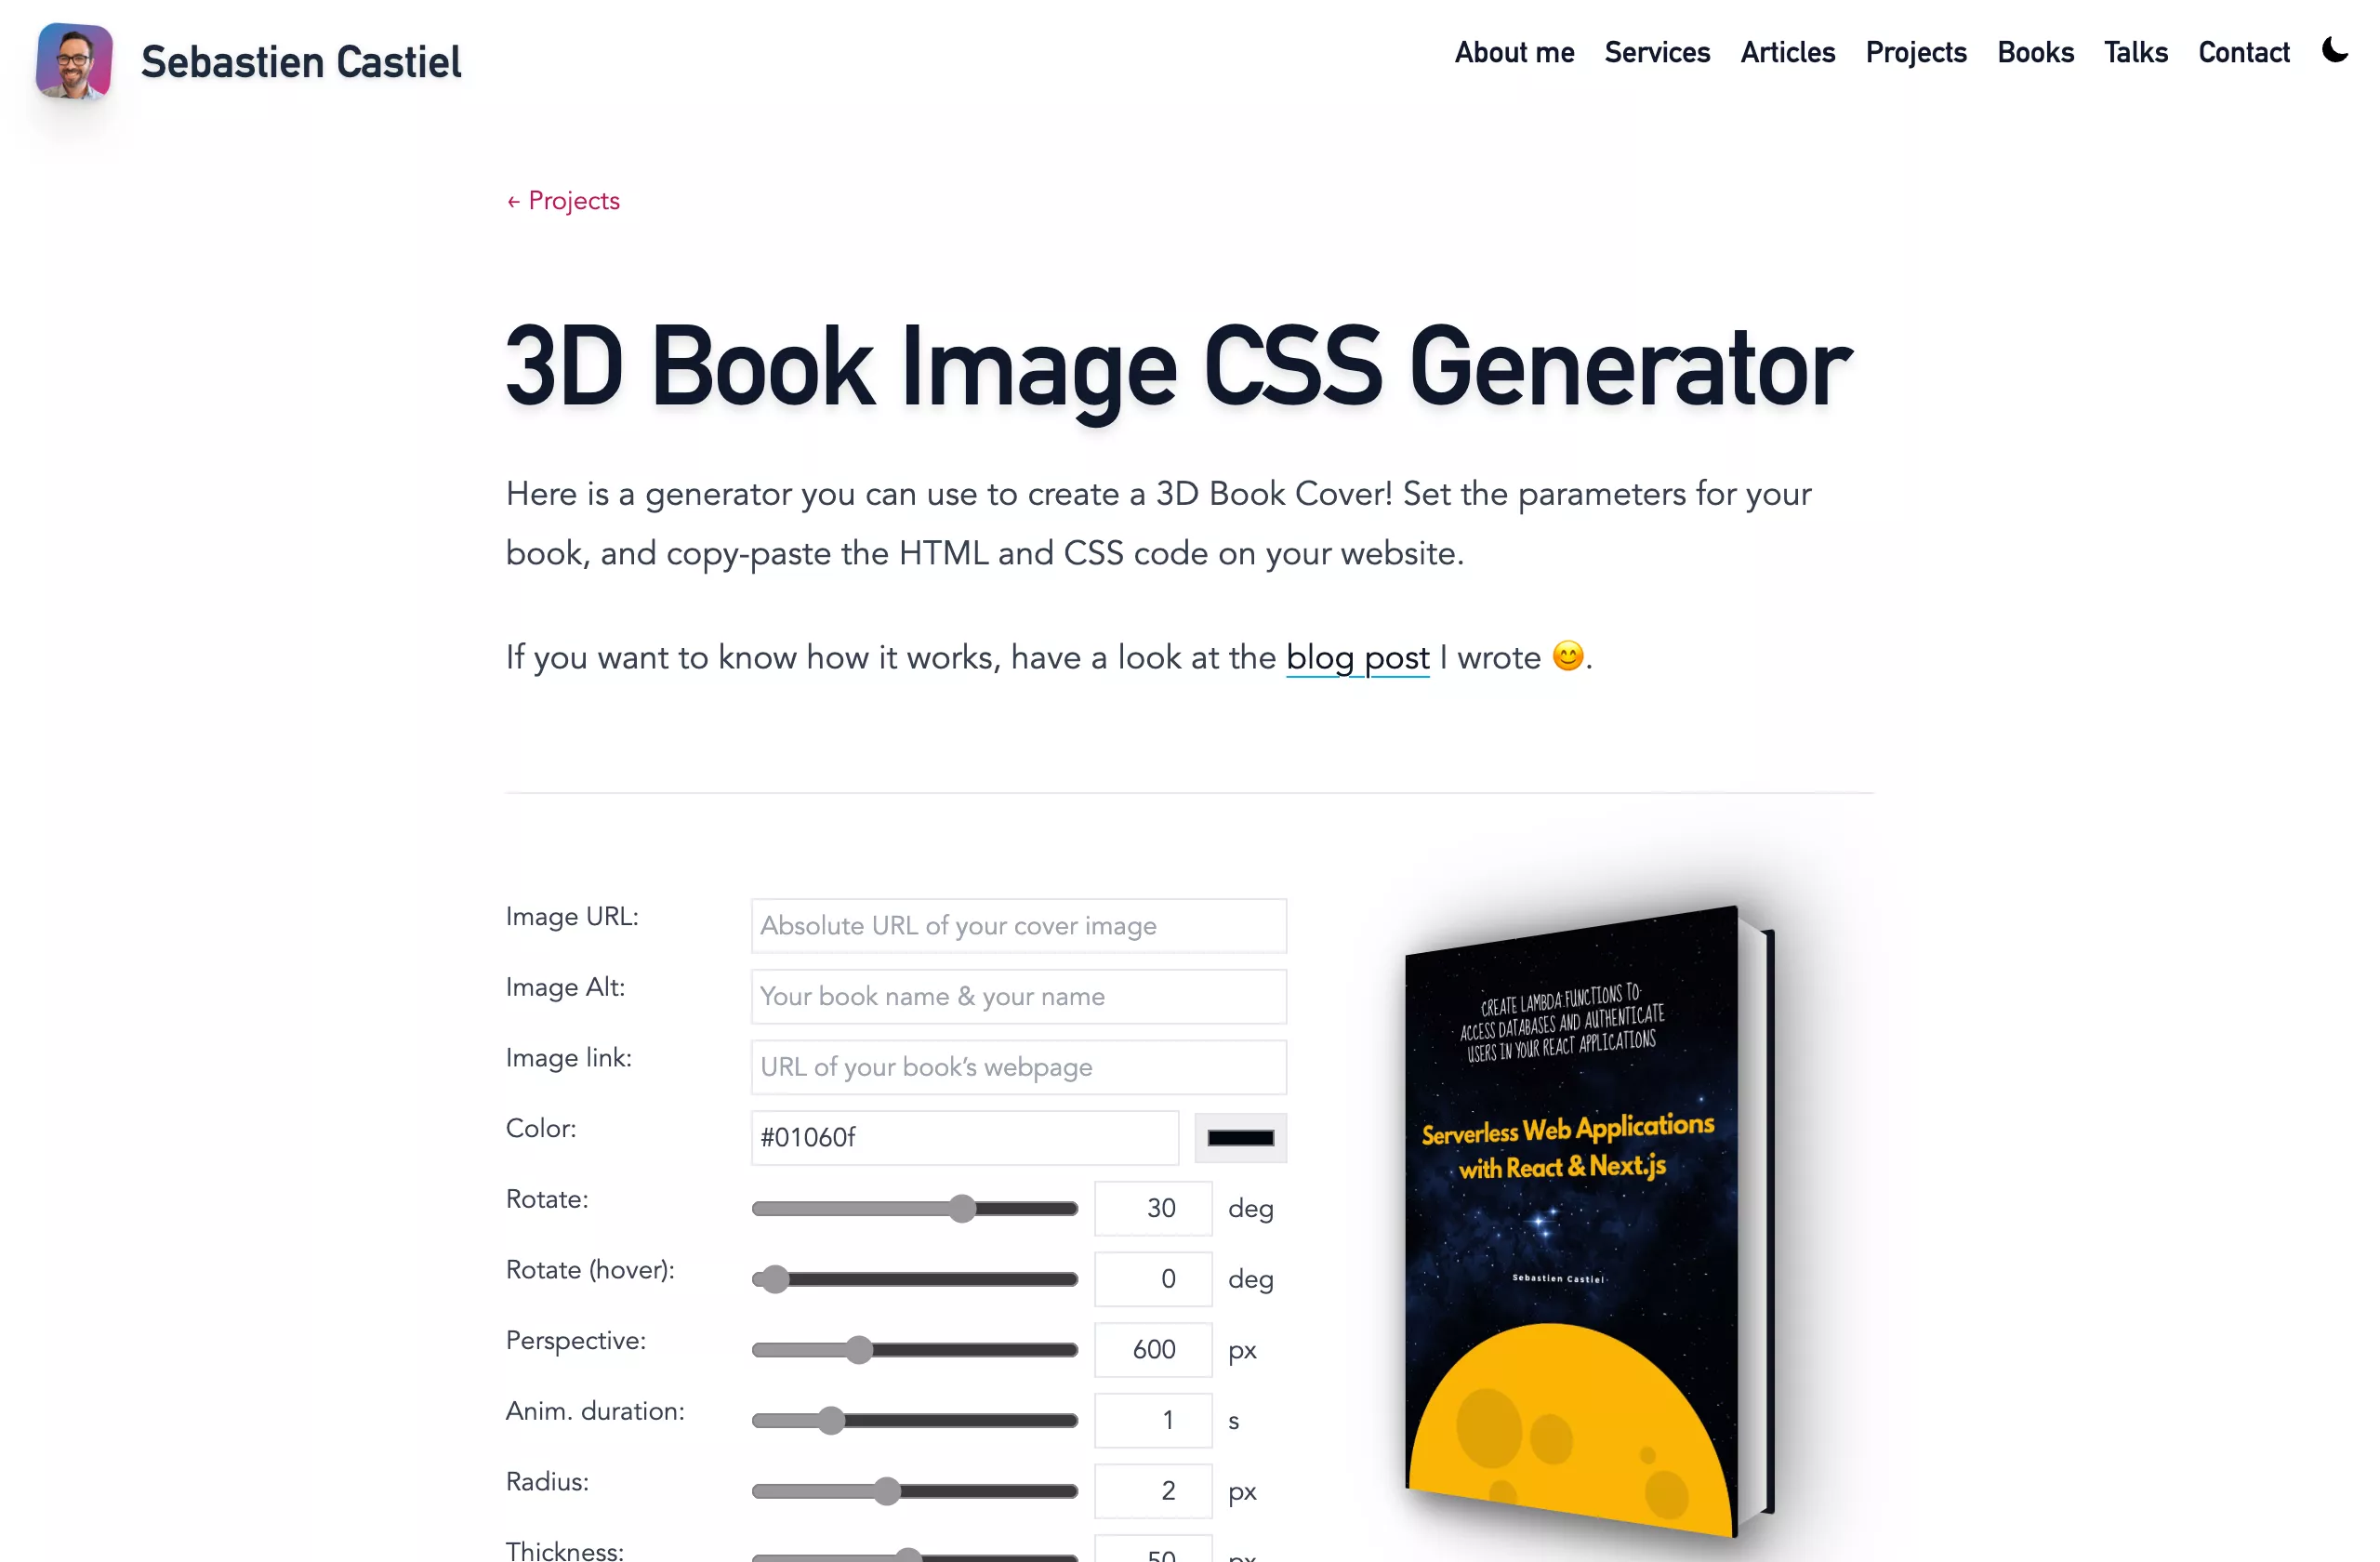 3D Book Image CSS Generator